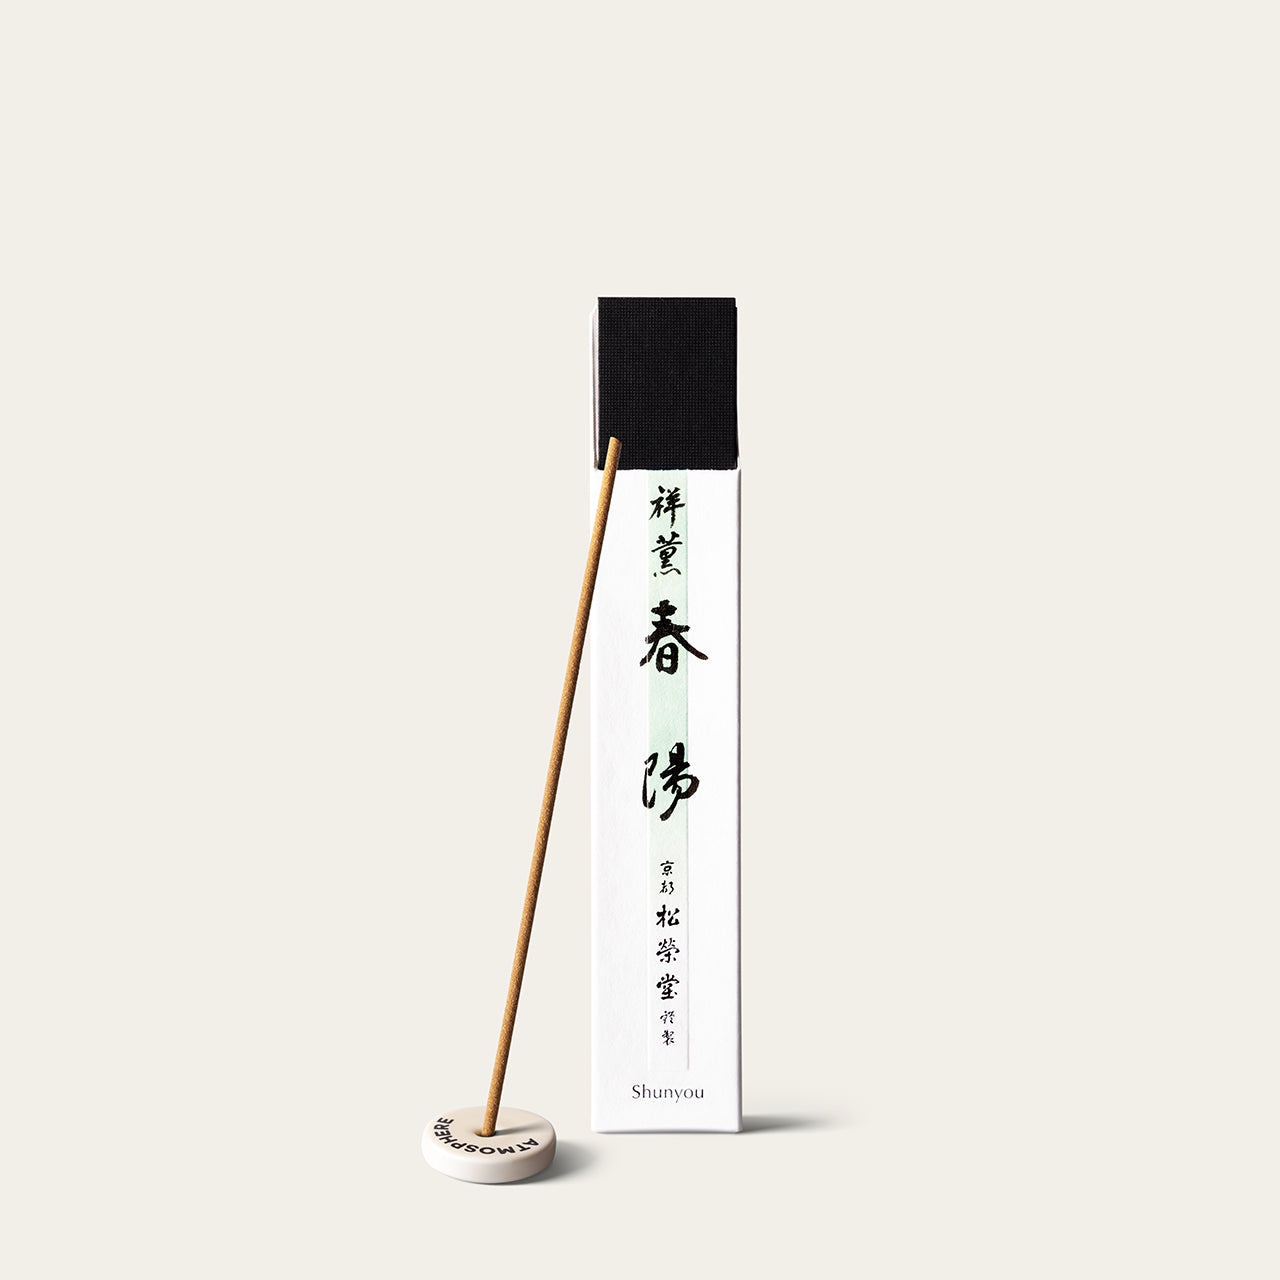 Shoyeido Premium Beckoning Spring Shunyou Japanese incense sticks (15 sticks) with Atmosphere ceramic incense holder